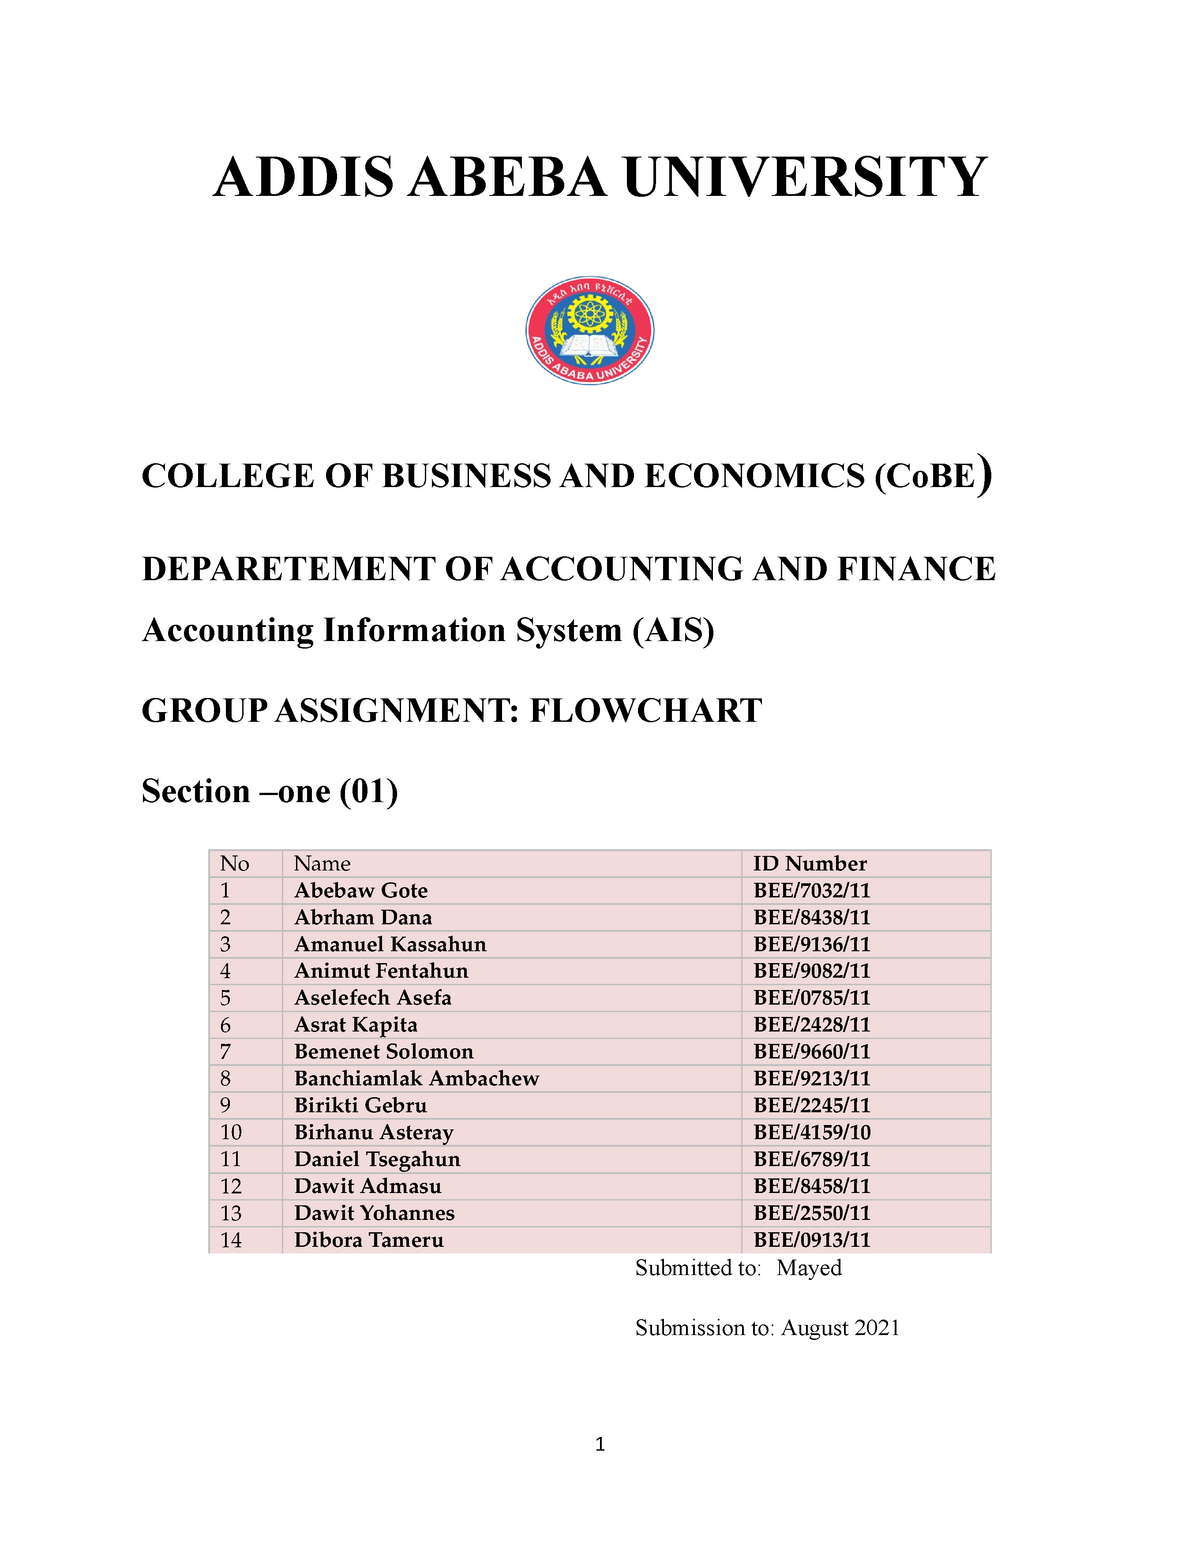 addis ababa university phd program requirements